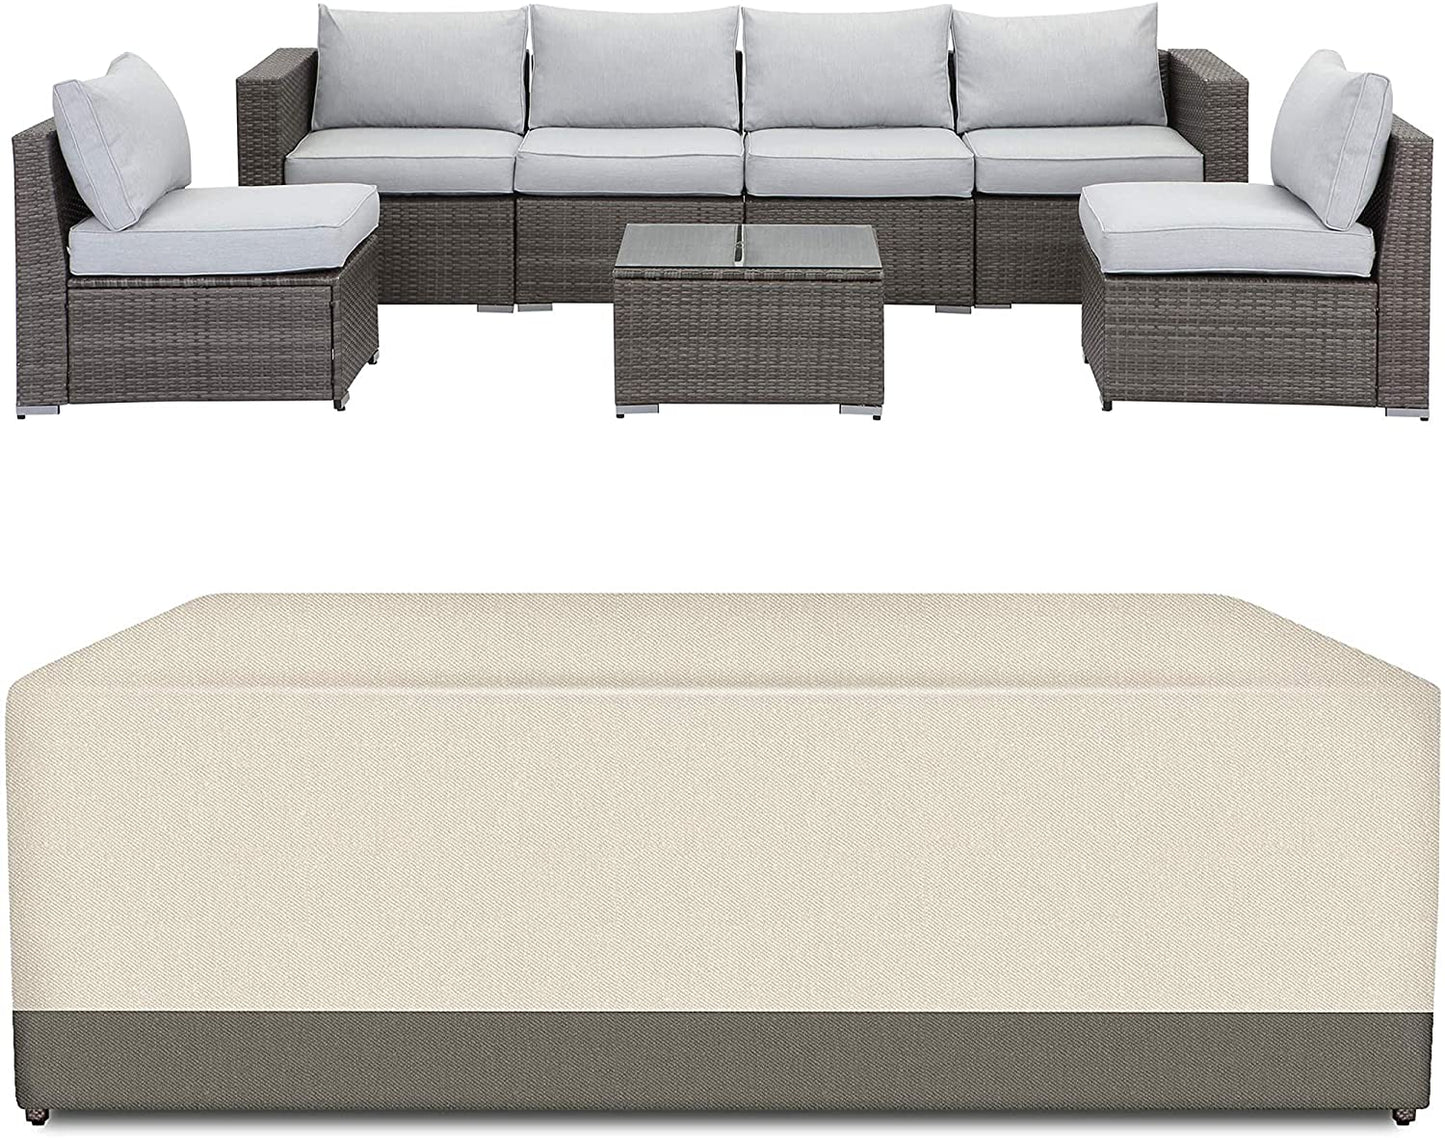 Patio Furniture Set Cover, Rectangular,124 X 63 X 27 inches, Beige